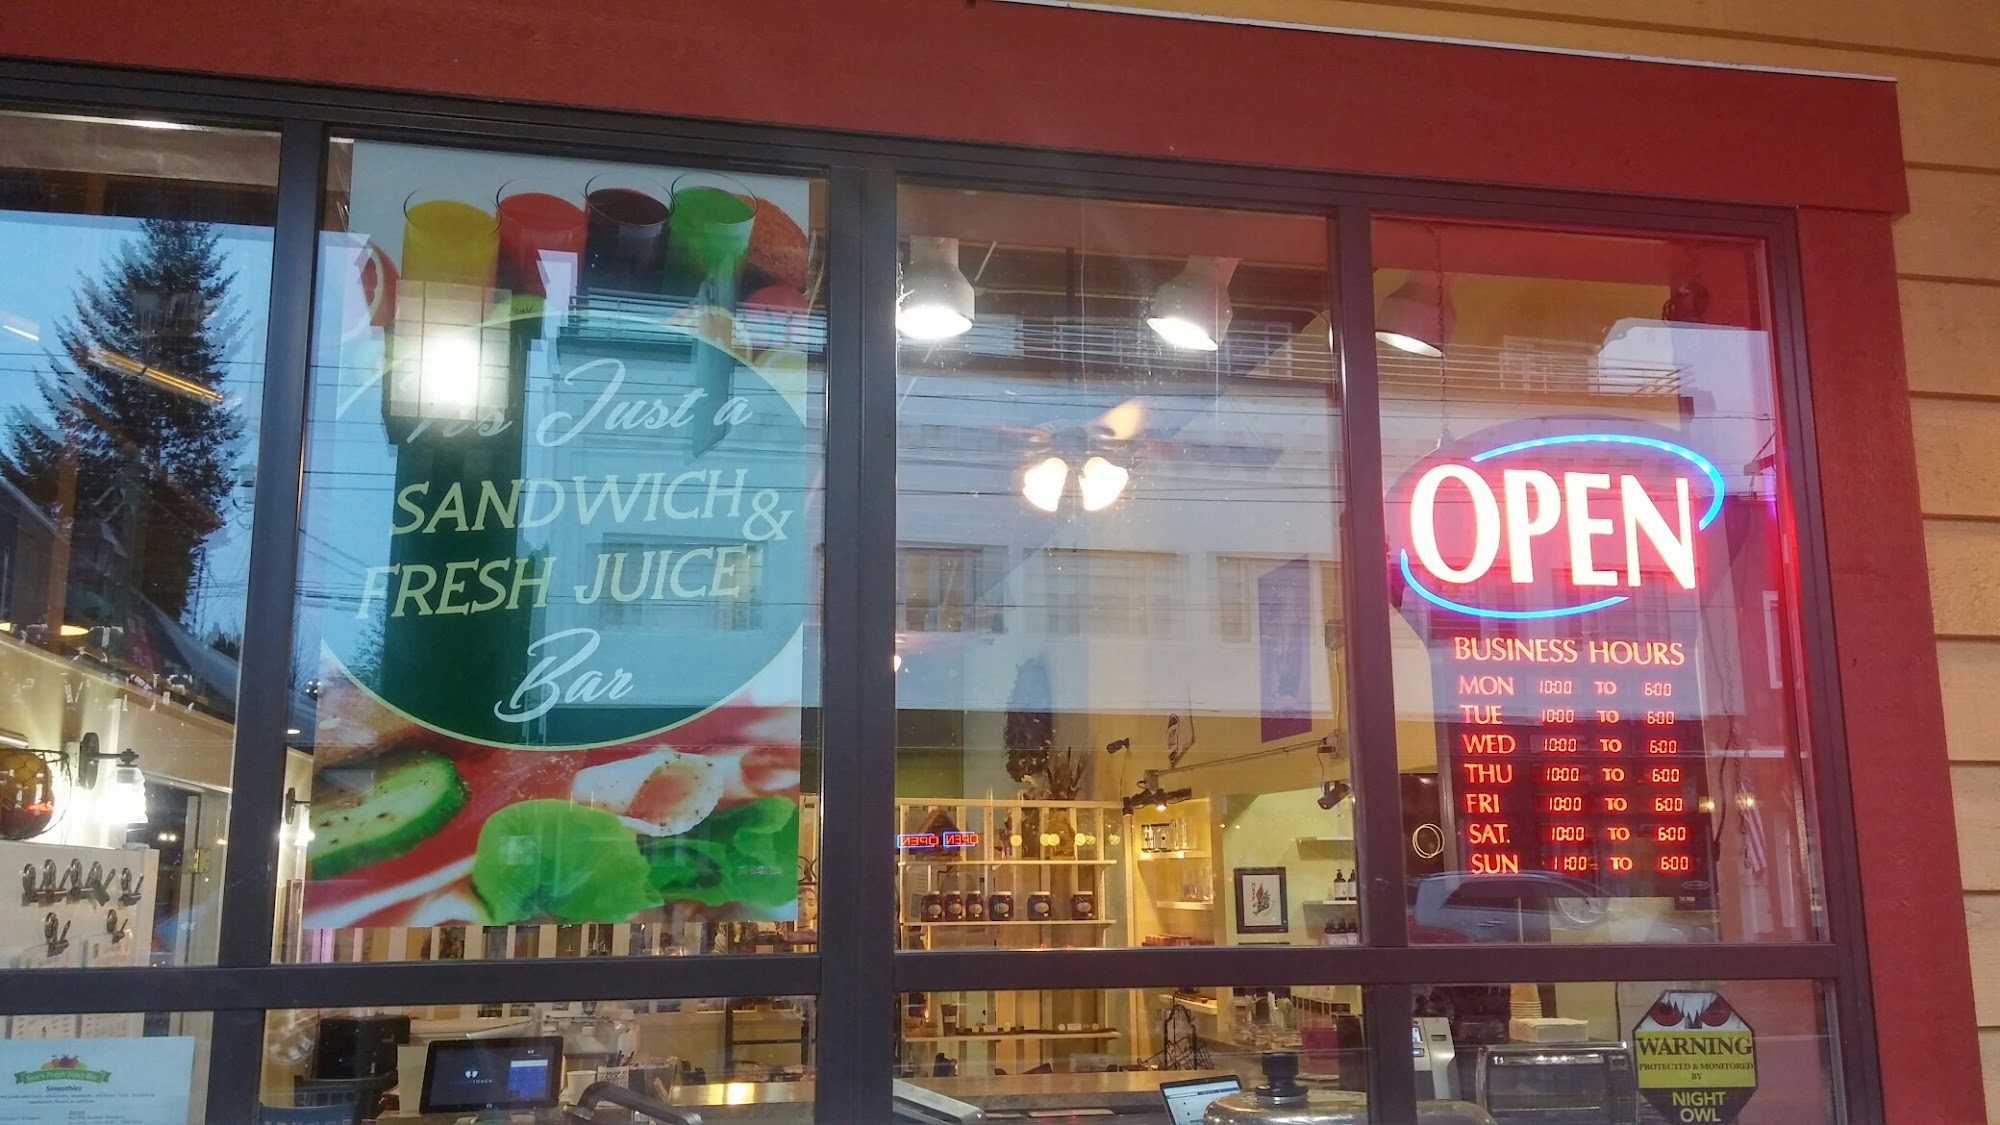 Sue's Fresh Juice Bar and Sandwich Shop